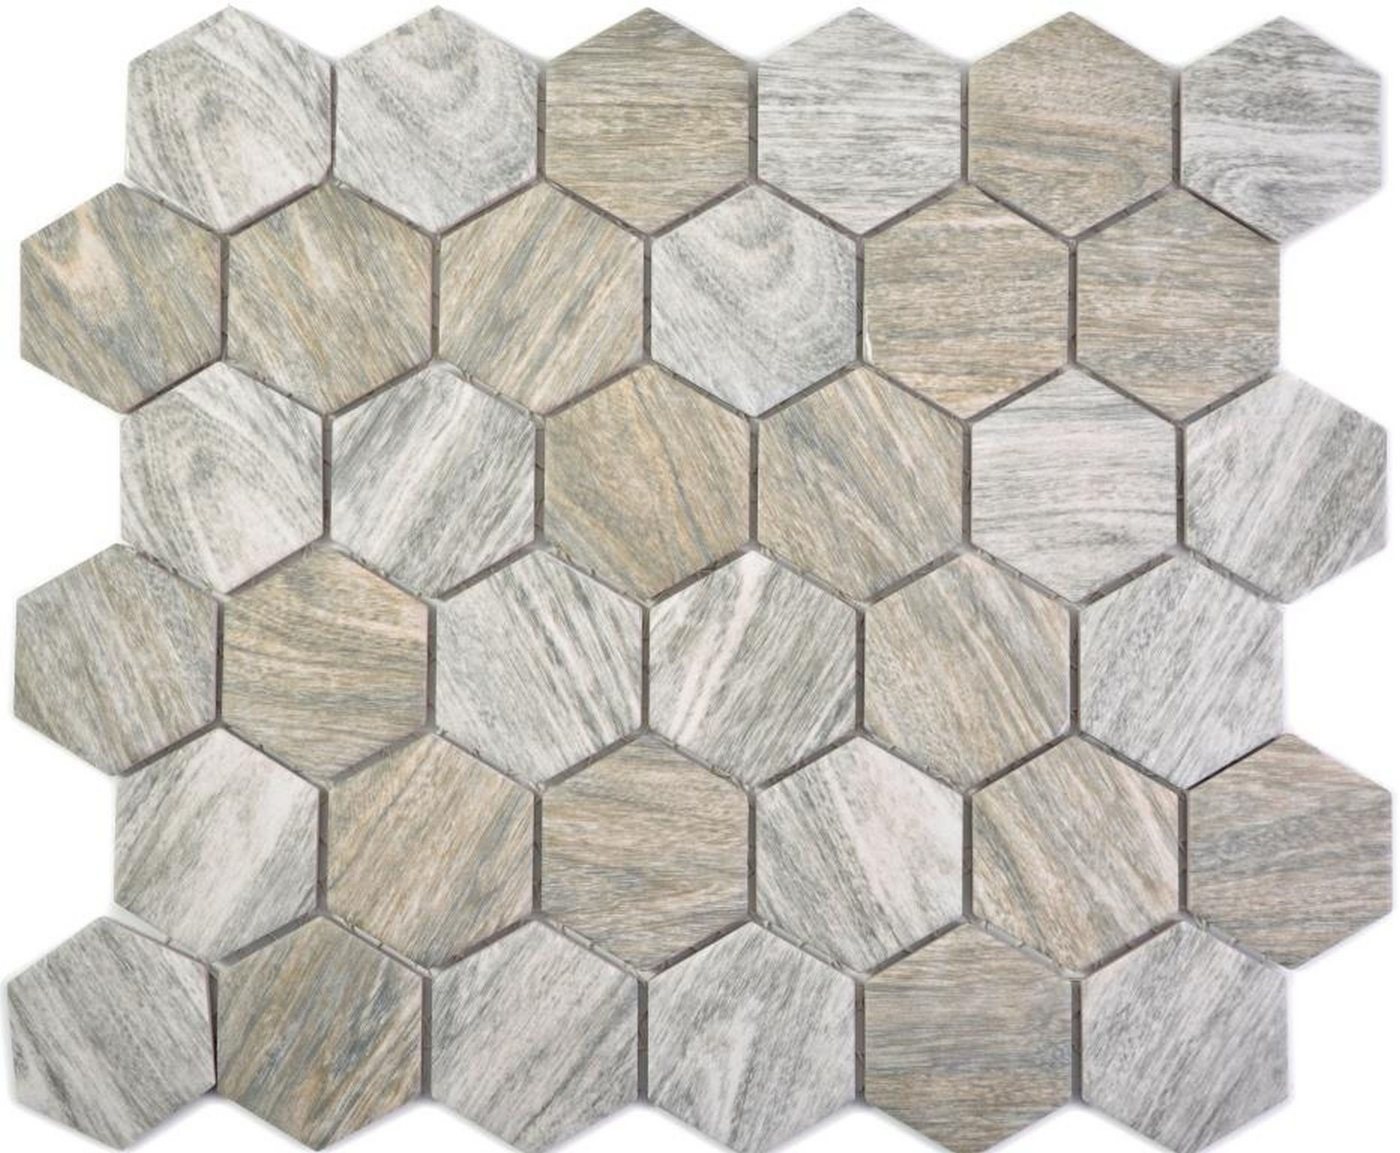 Mosani Mosaikfliesen Hexagonale Sechseck Mosaik Fliese Keramik Holzmaserung grau braun von Mosani